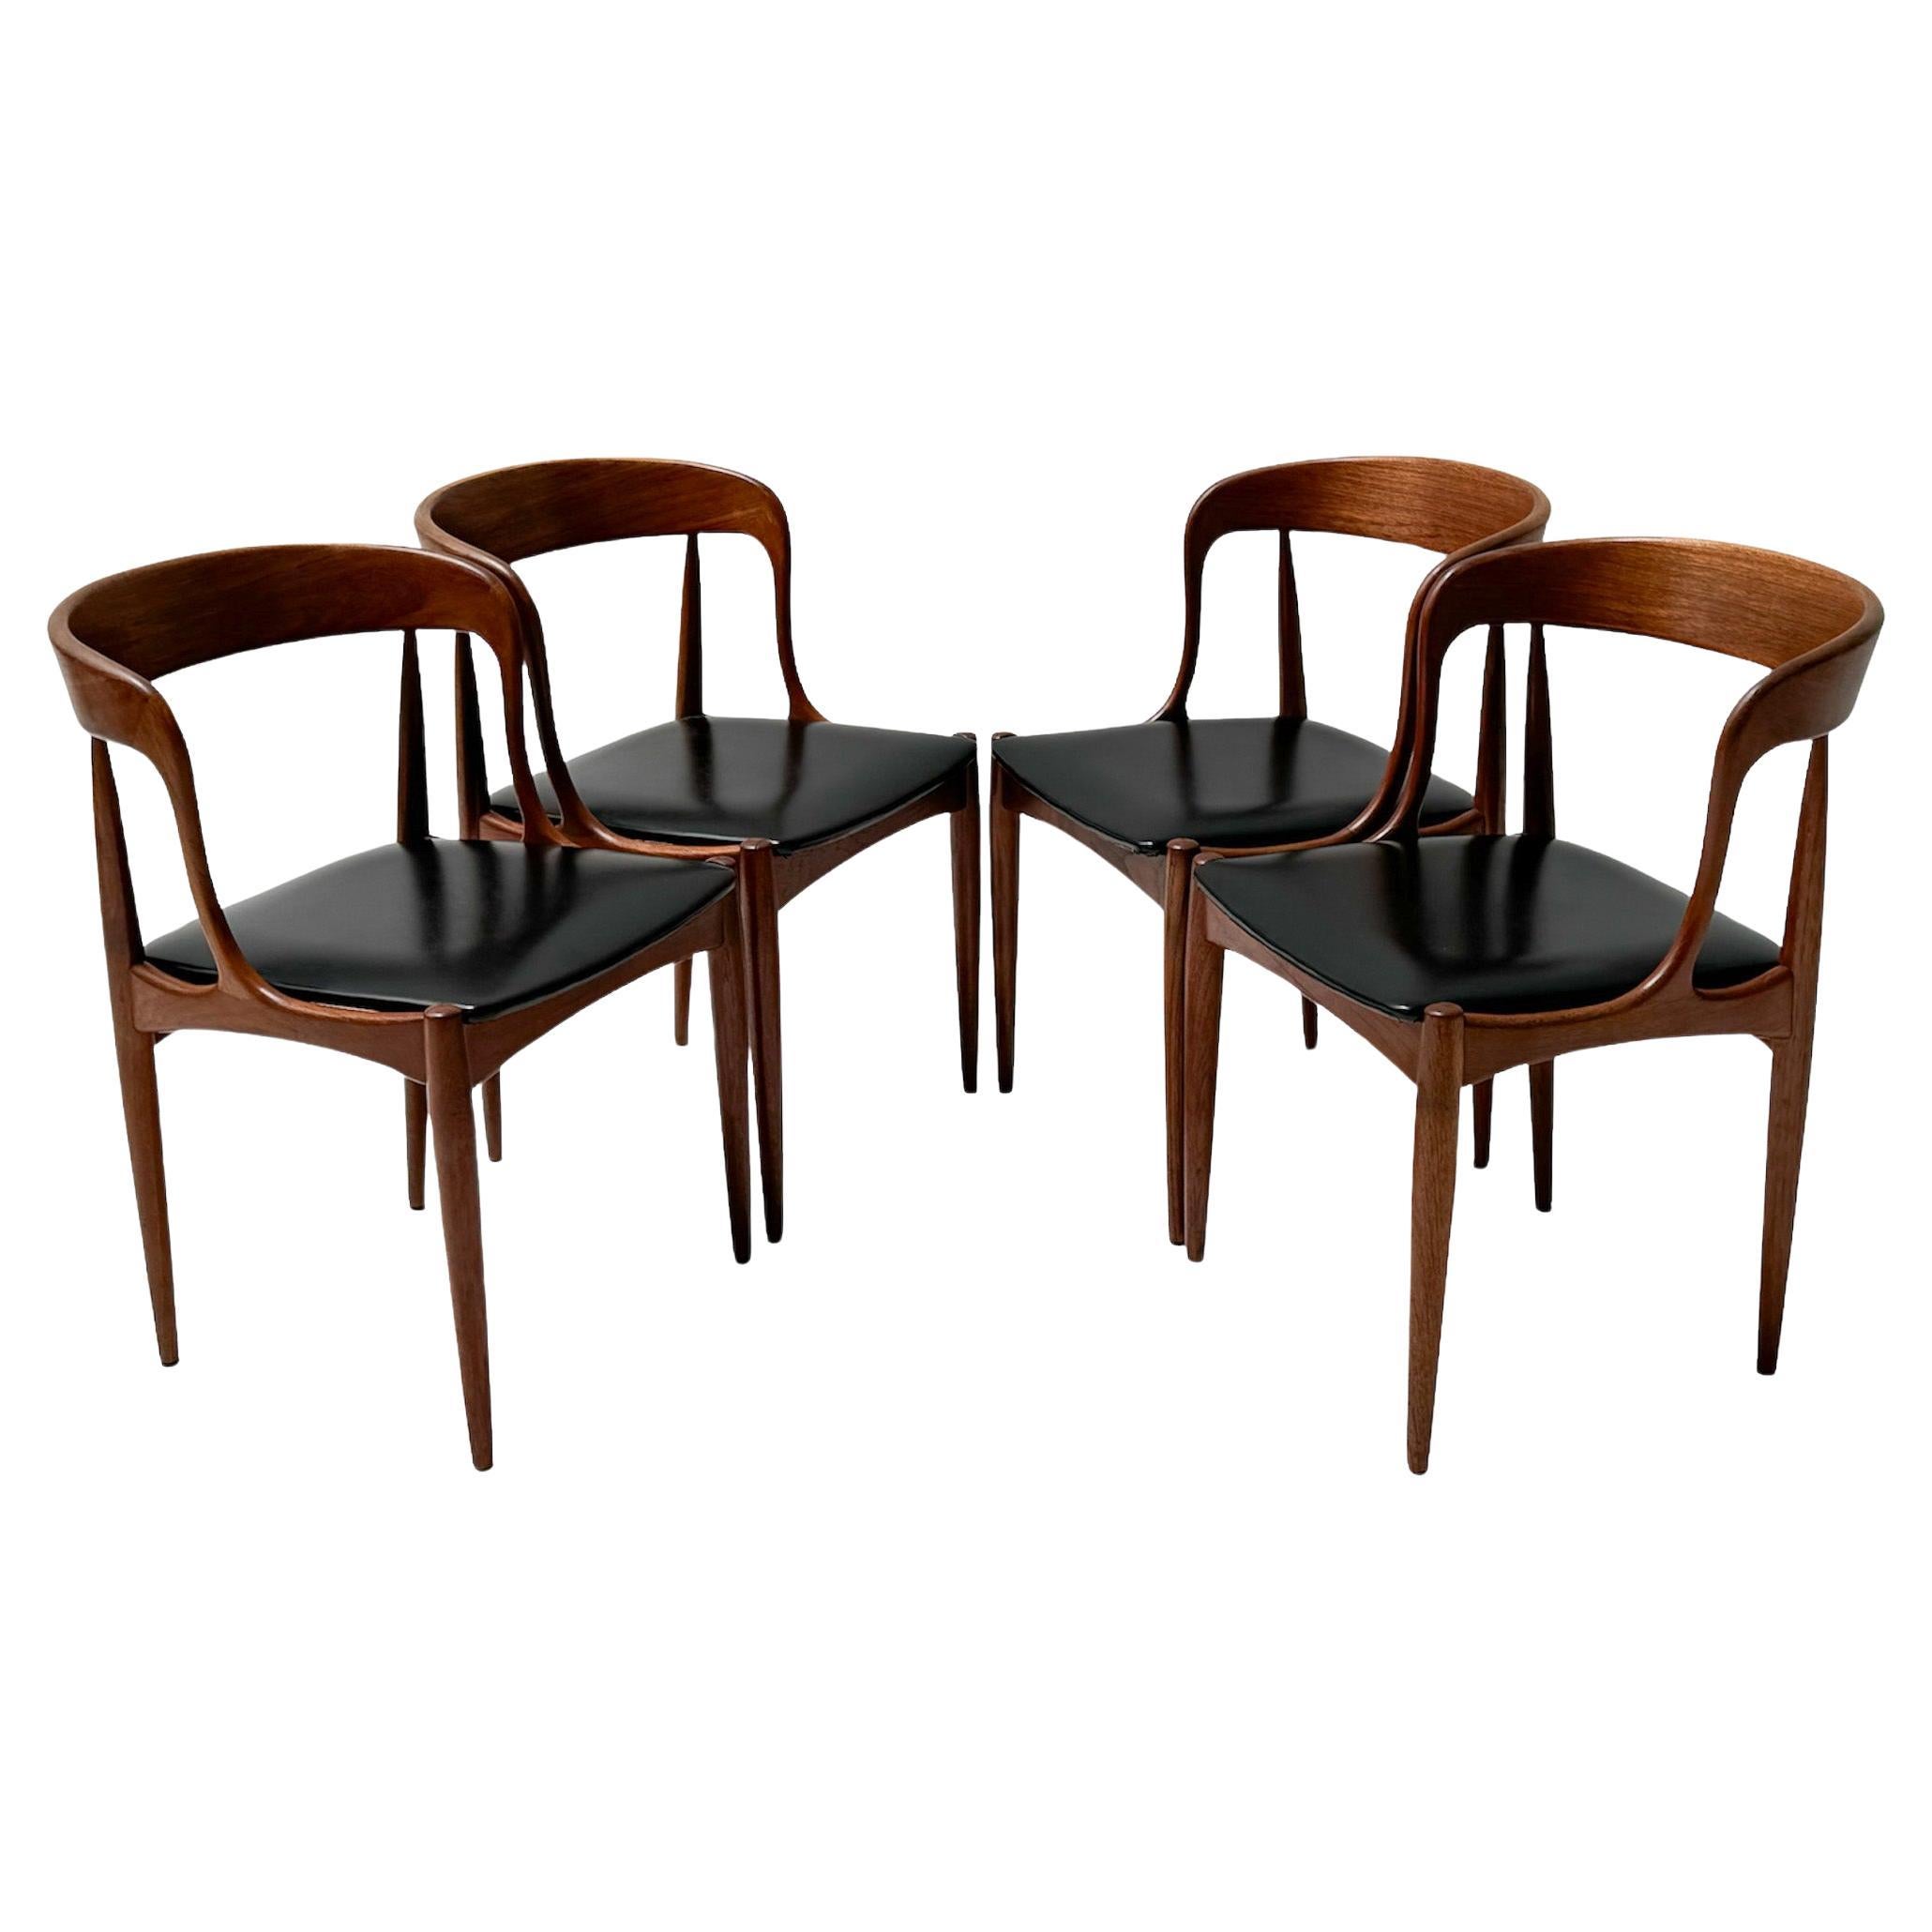 Four Teak Mid-Century Modern Dining Chairs by Johannes Andersen for Uldum, 1960s